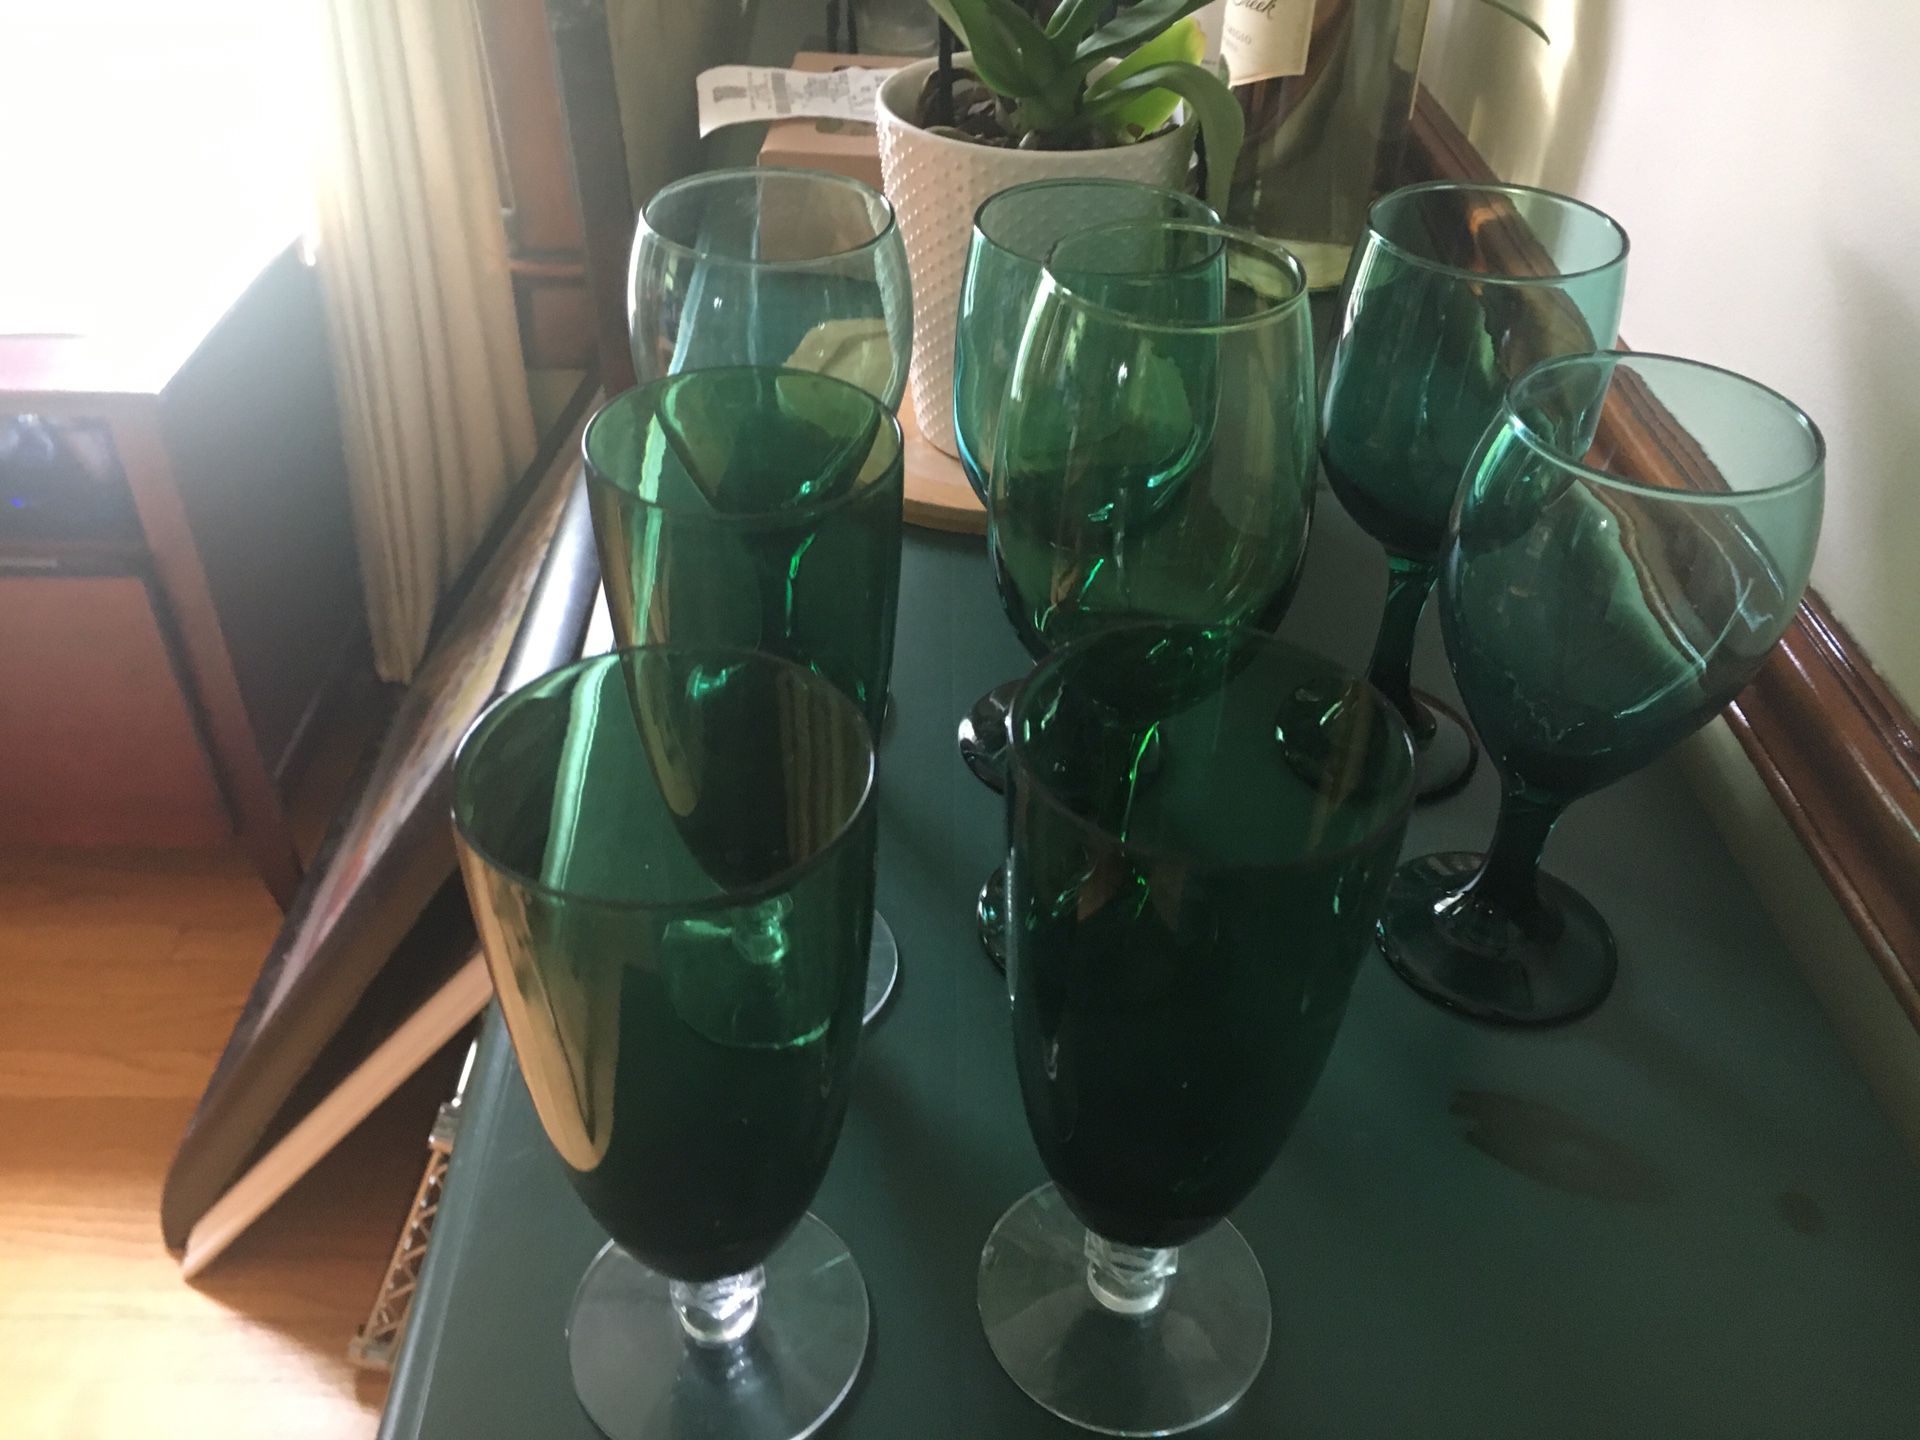 Wine glasses (8) assorted green glass